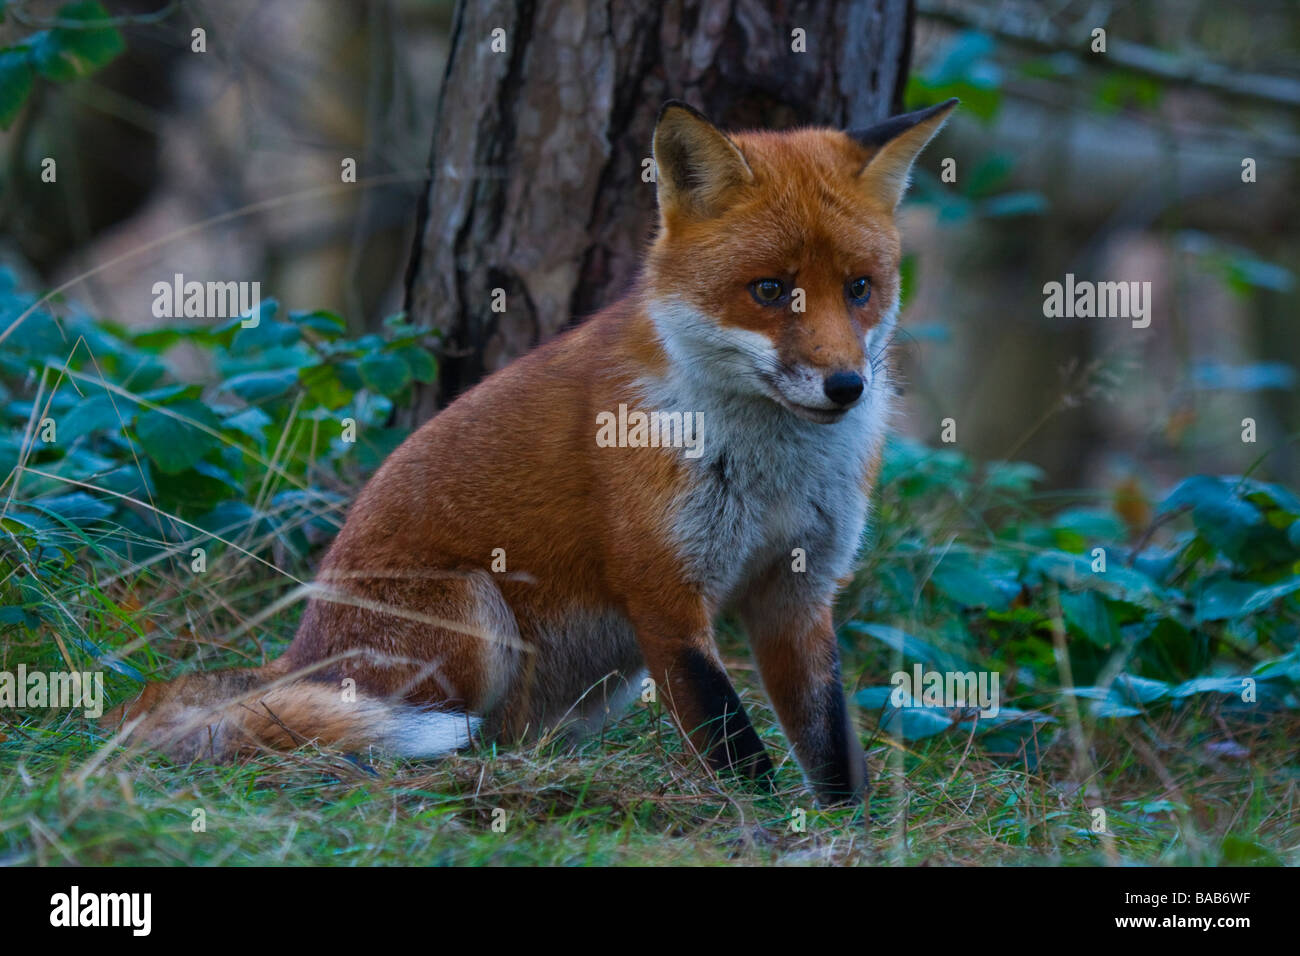 dog Fox portrait (vulpus vulpus) Stock Photo